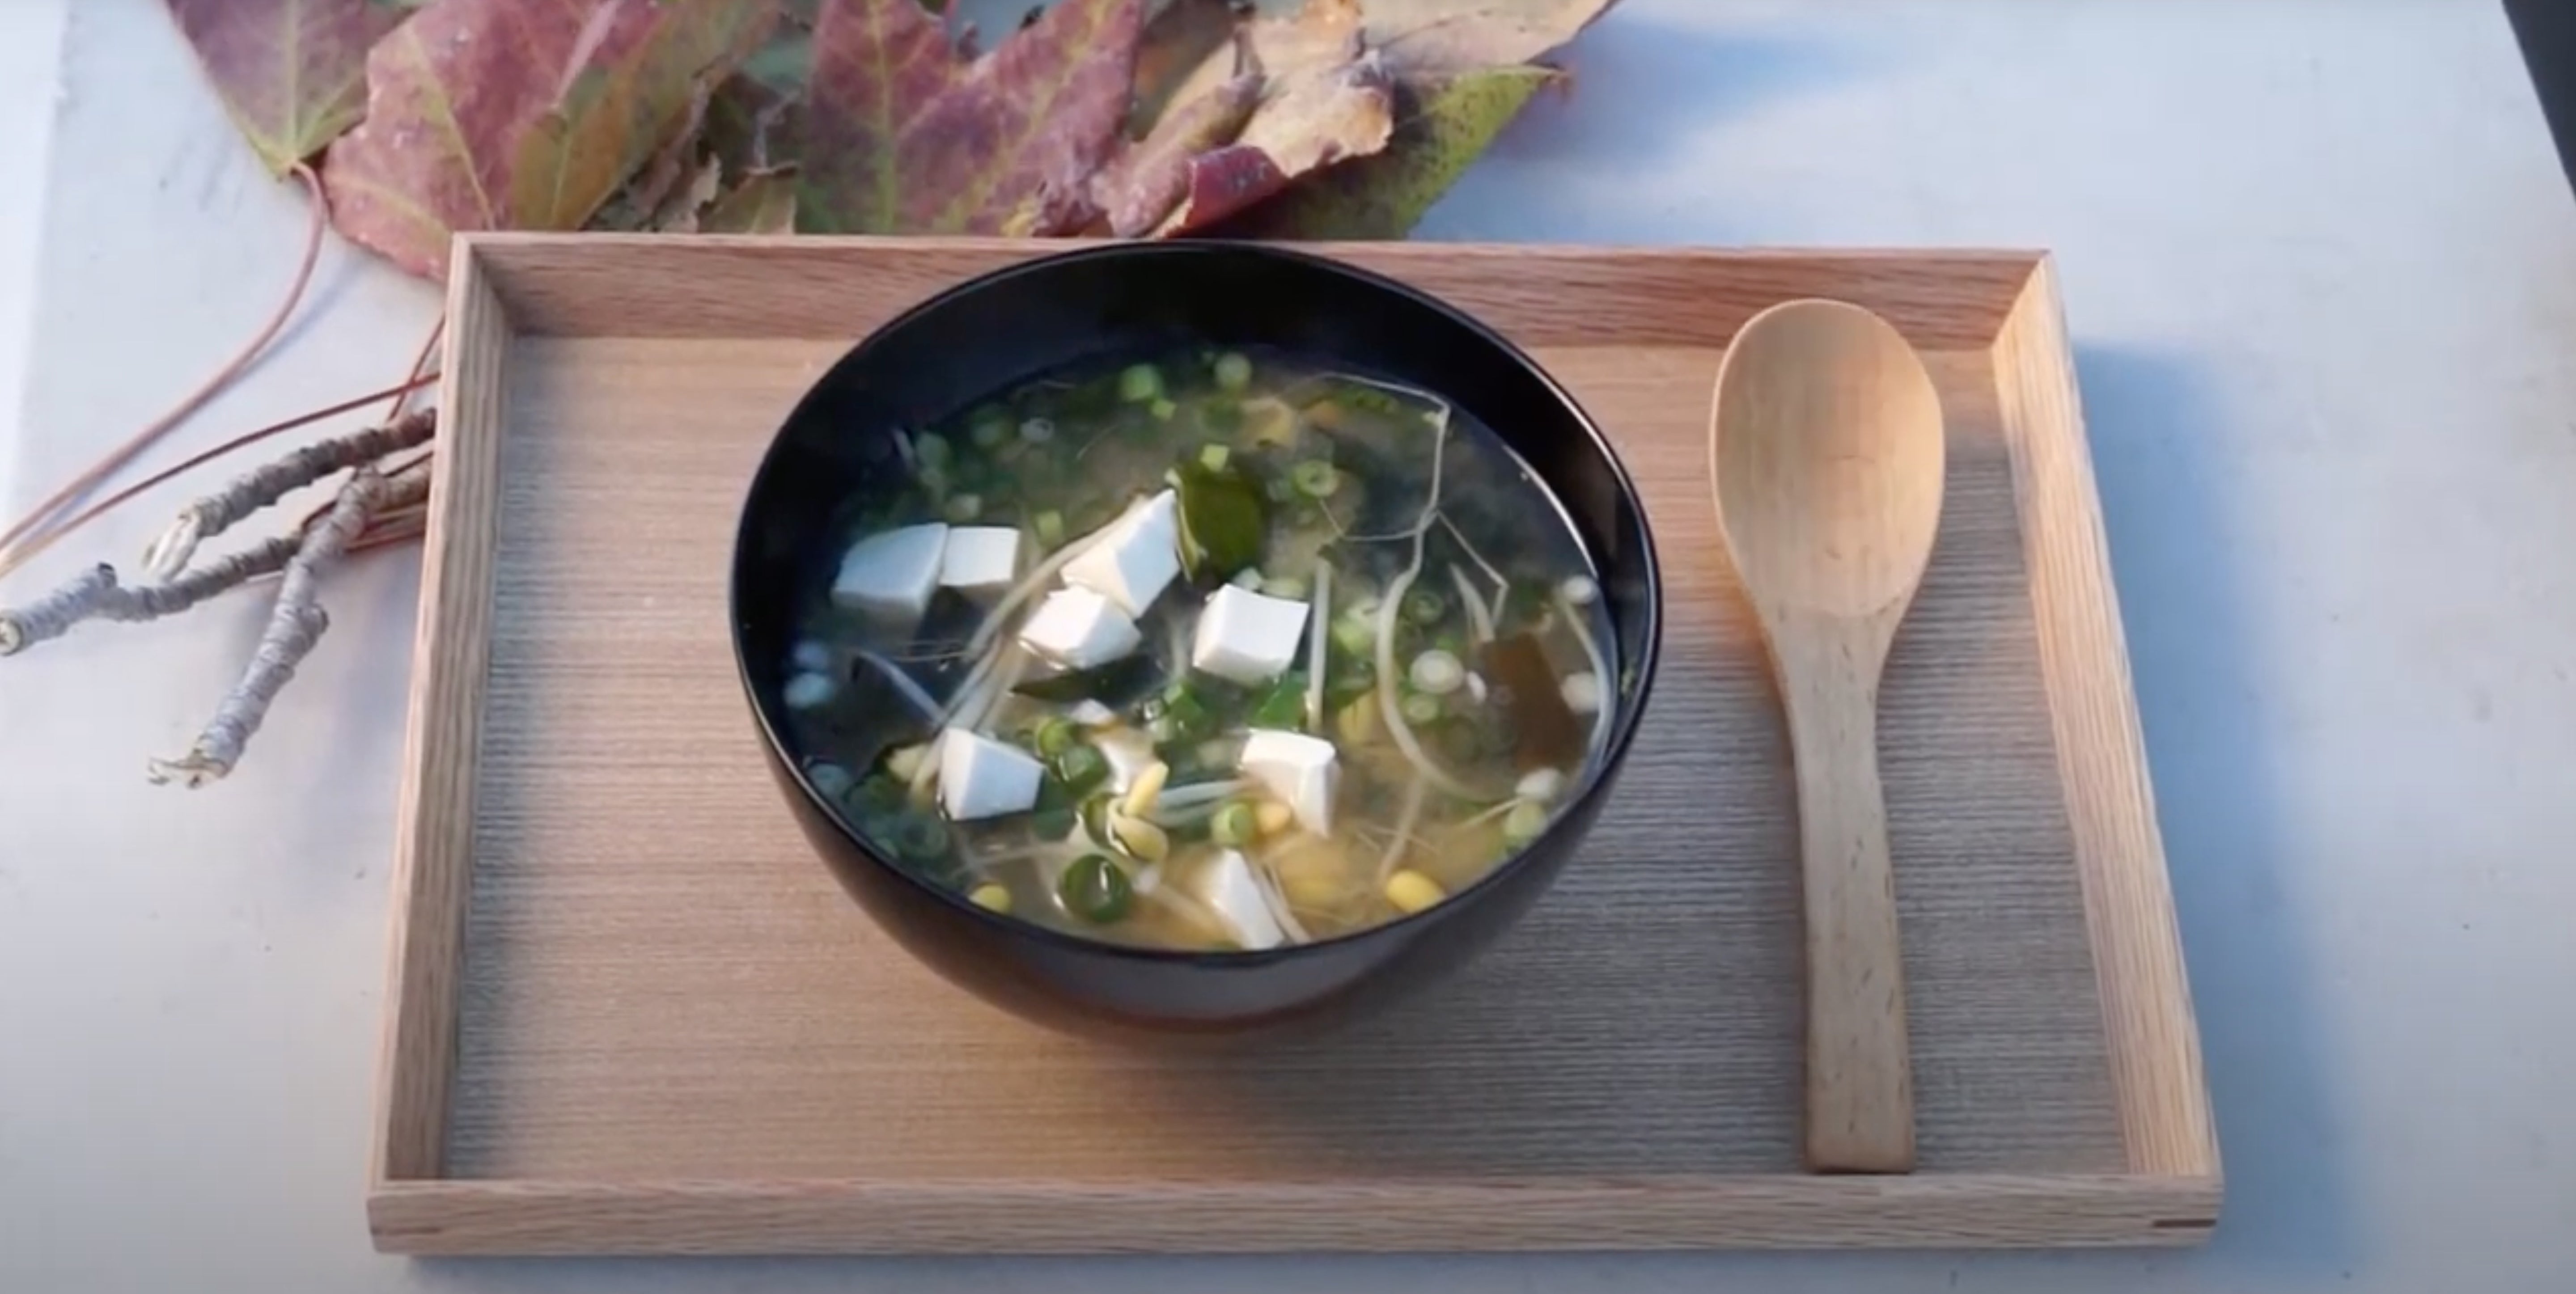 Sydney Sprouts miso soup kit recipe